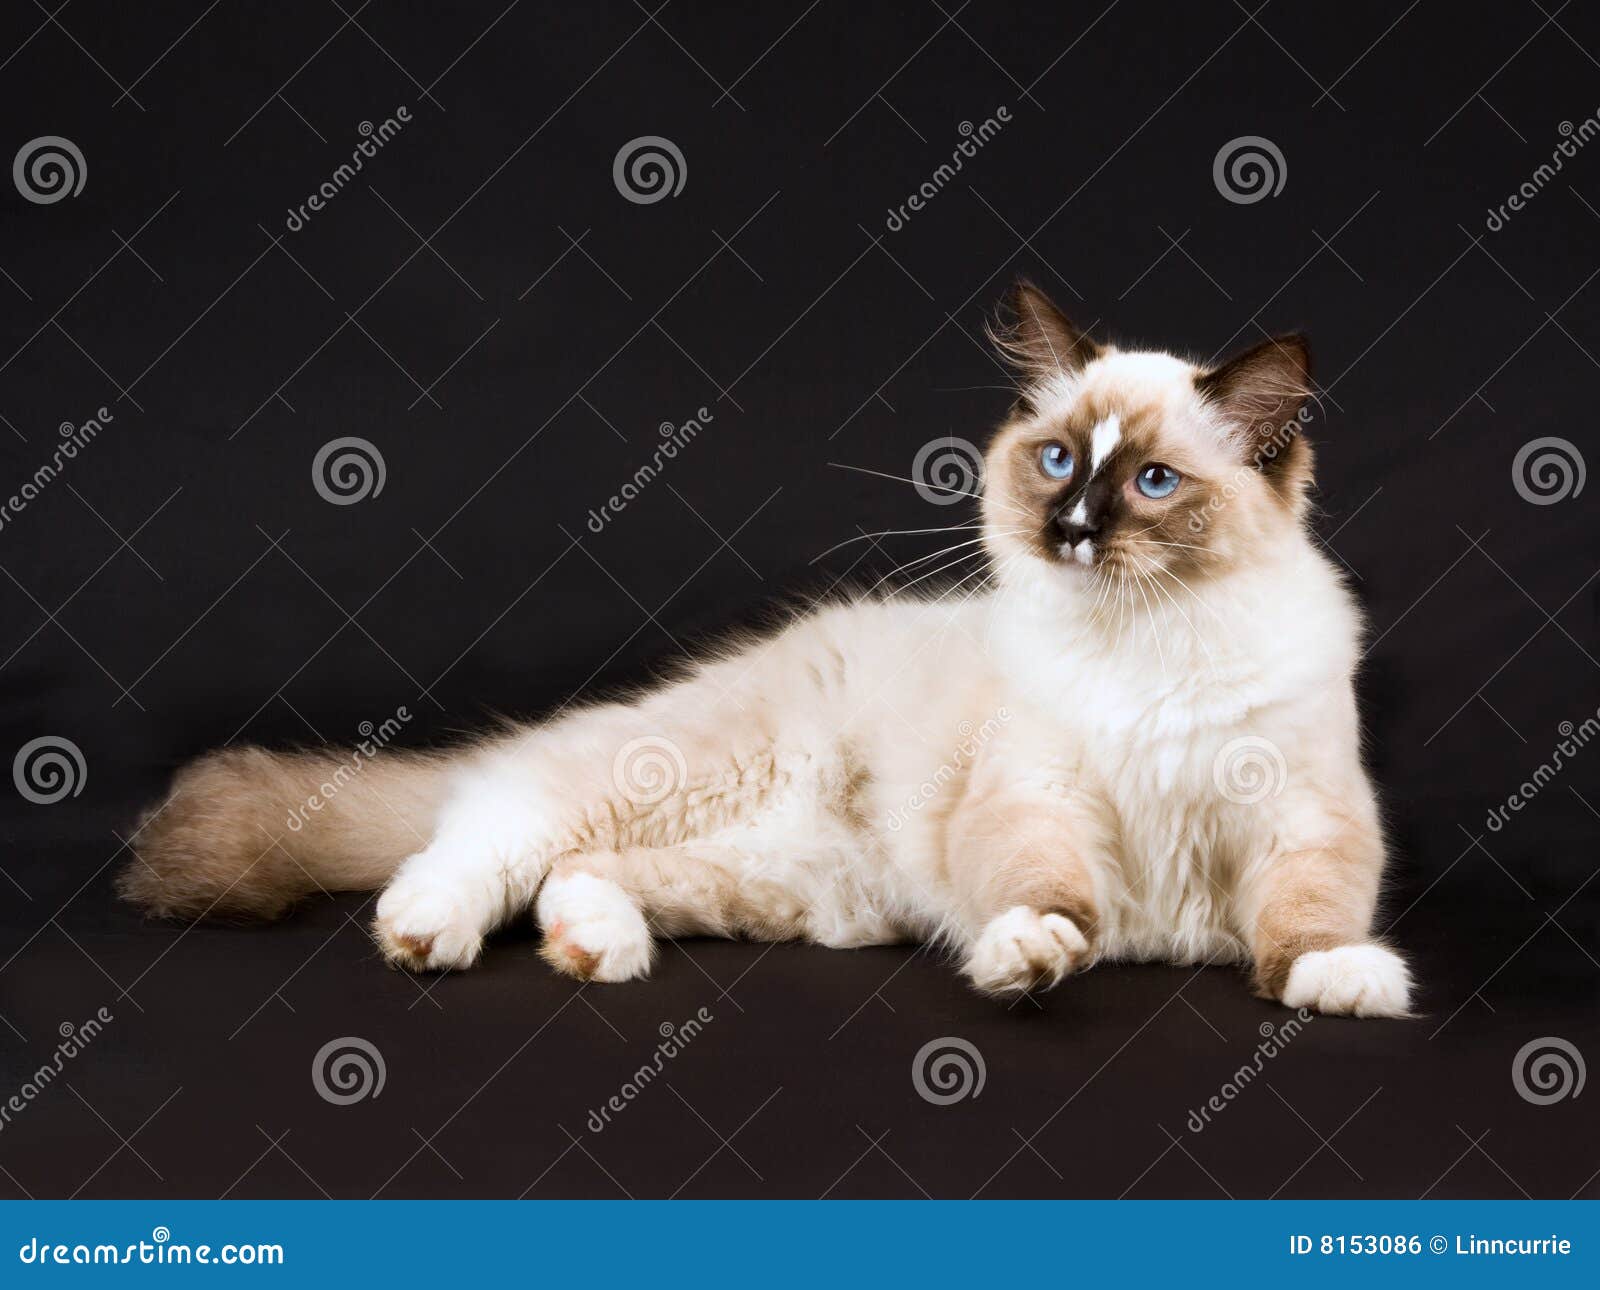 Pretty Cute Ragdoll Kitten on Black Background Stock Photo - Image of ...